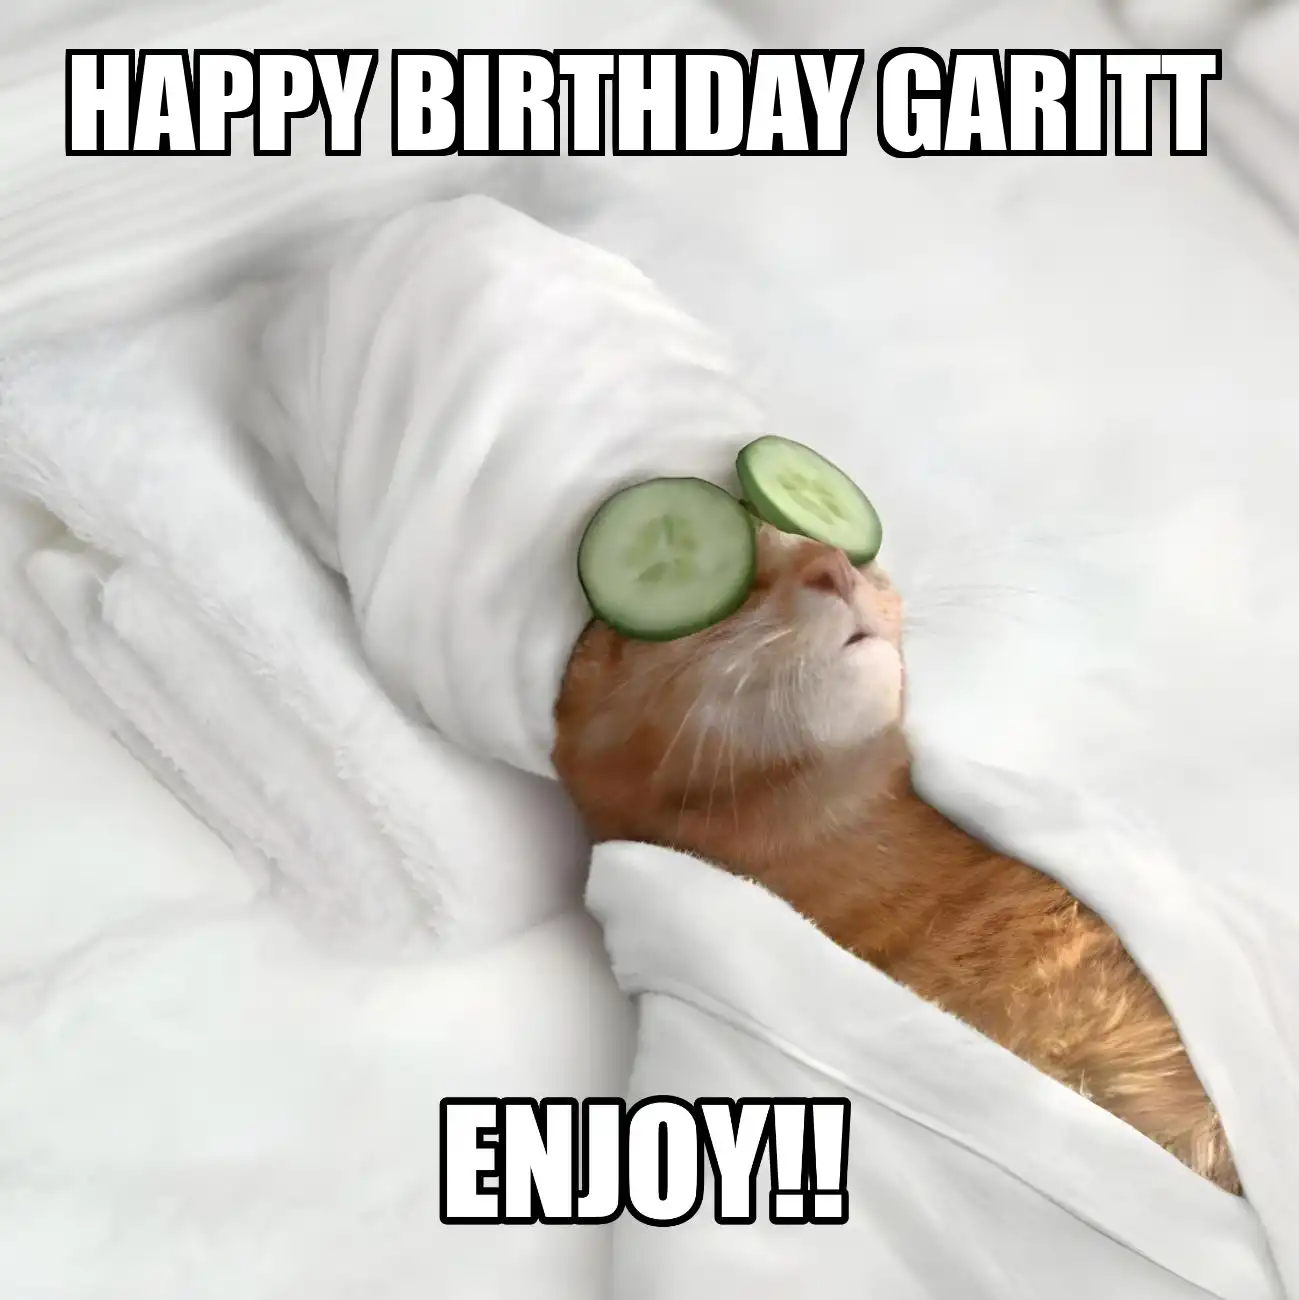 Happy Birthday Garitt Enjoy Cat Meme